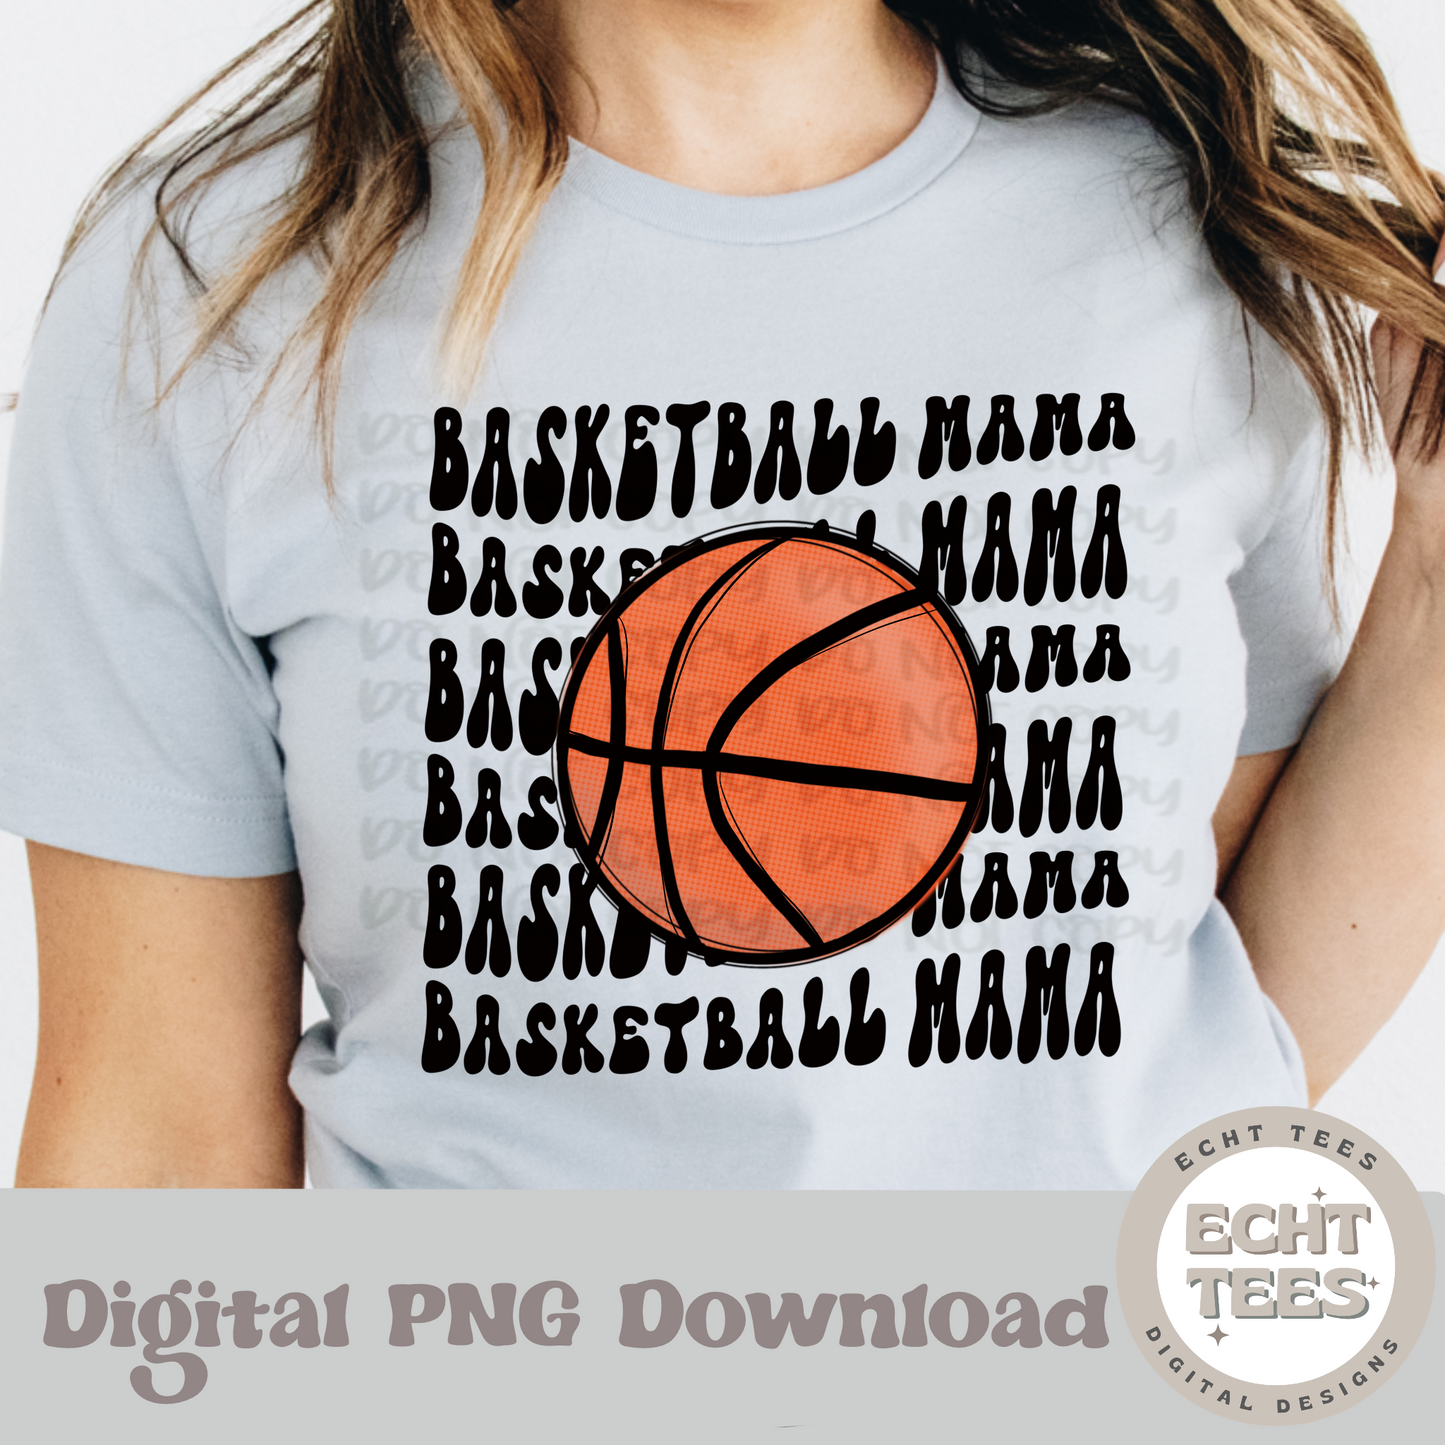 Retro Basketball Mama PNG Digital Download